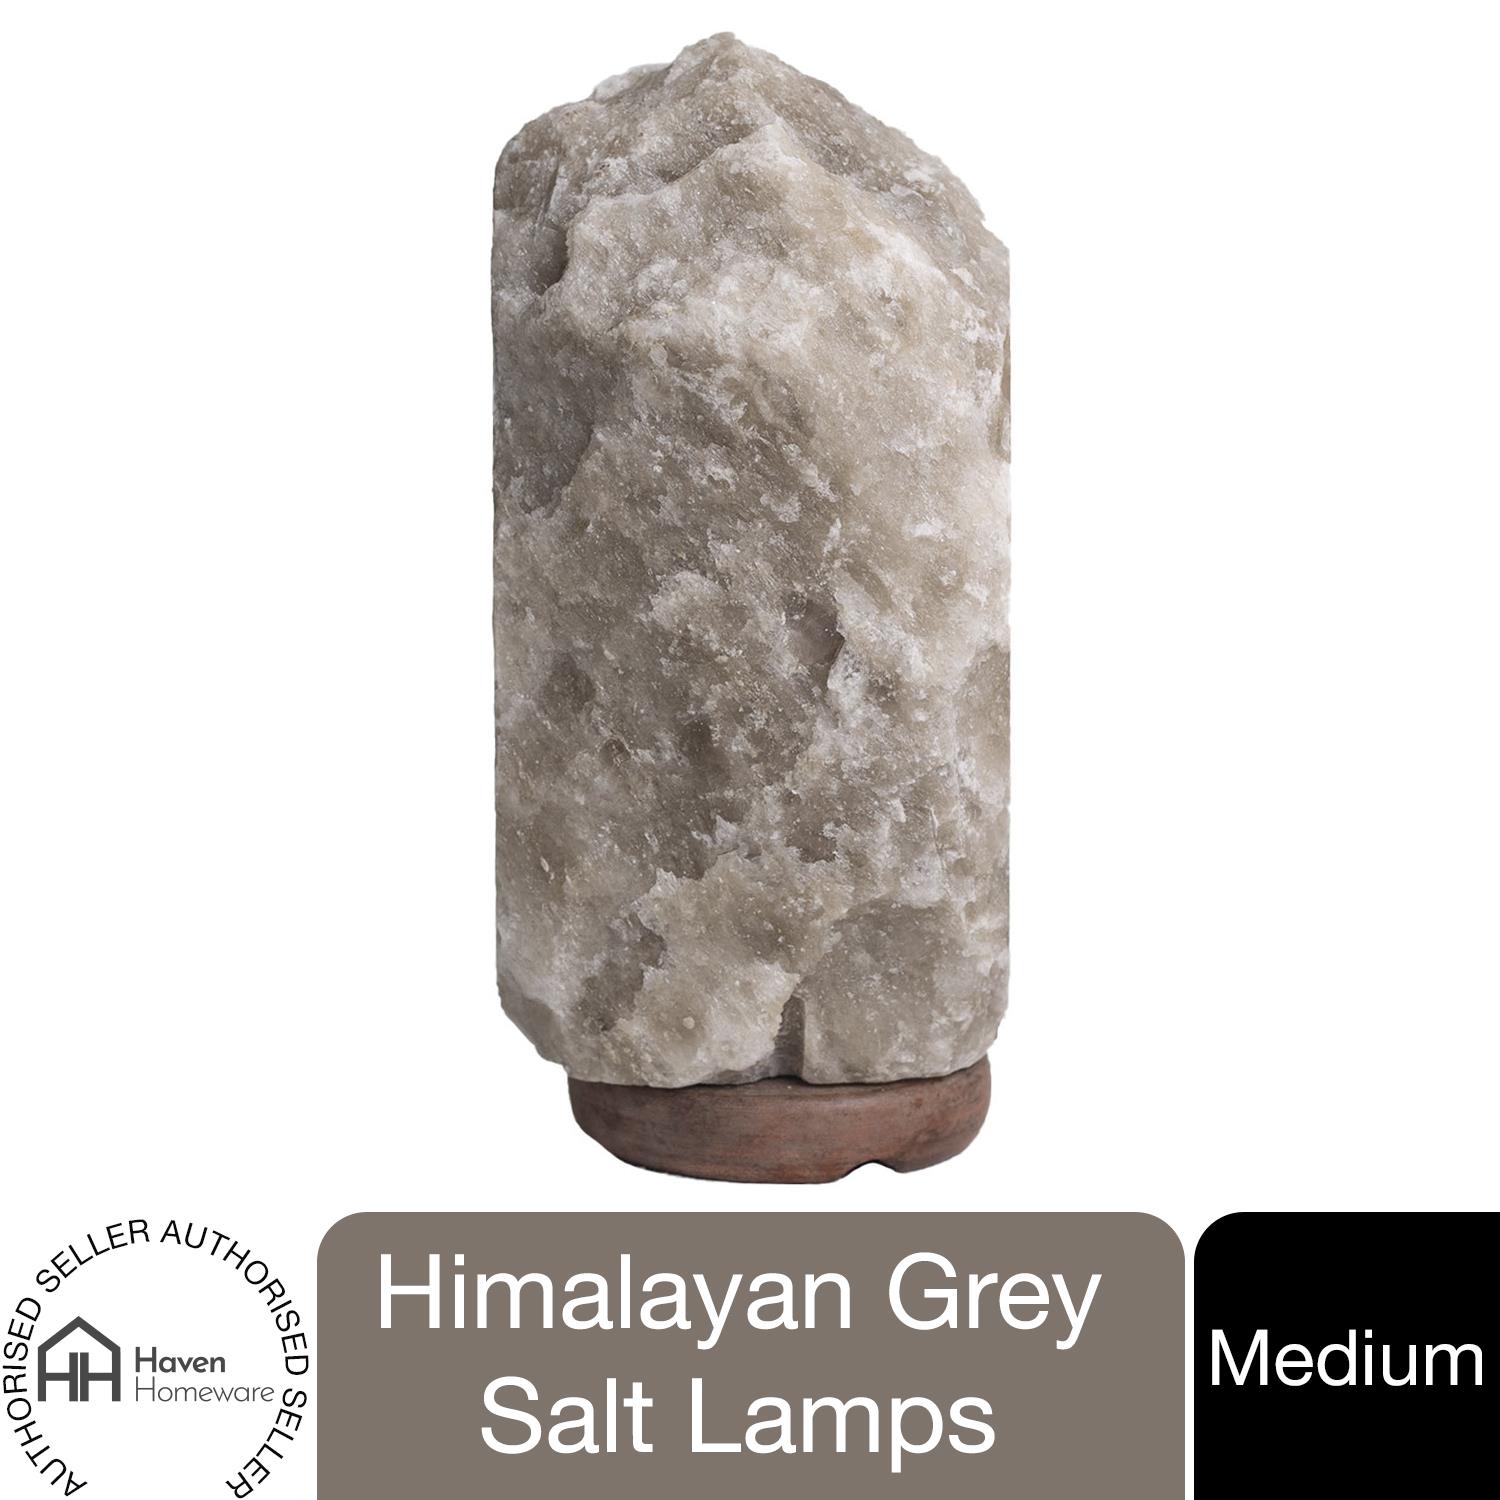 Haven Grey Himalayan Salt Lamp on a Premium Wooden Base – Natural Mood Light and Home Decor Accessory (Medium)